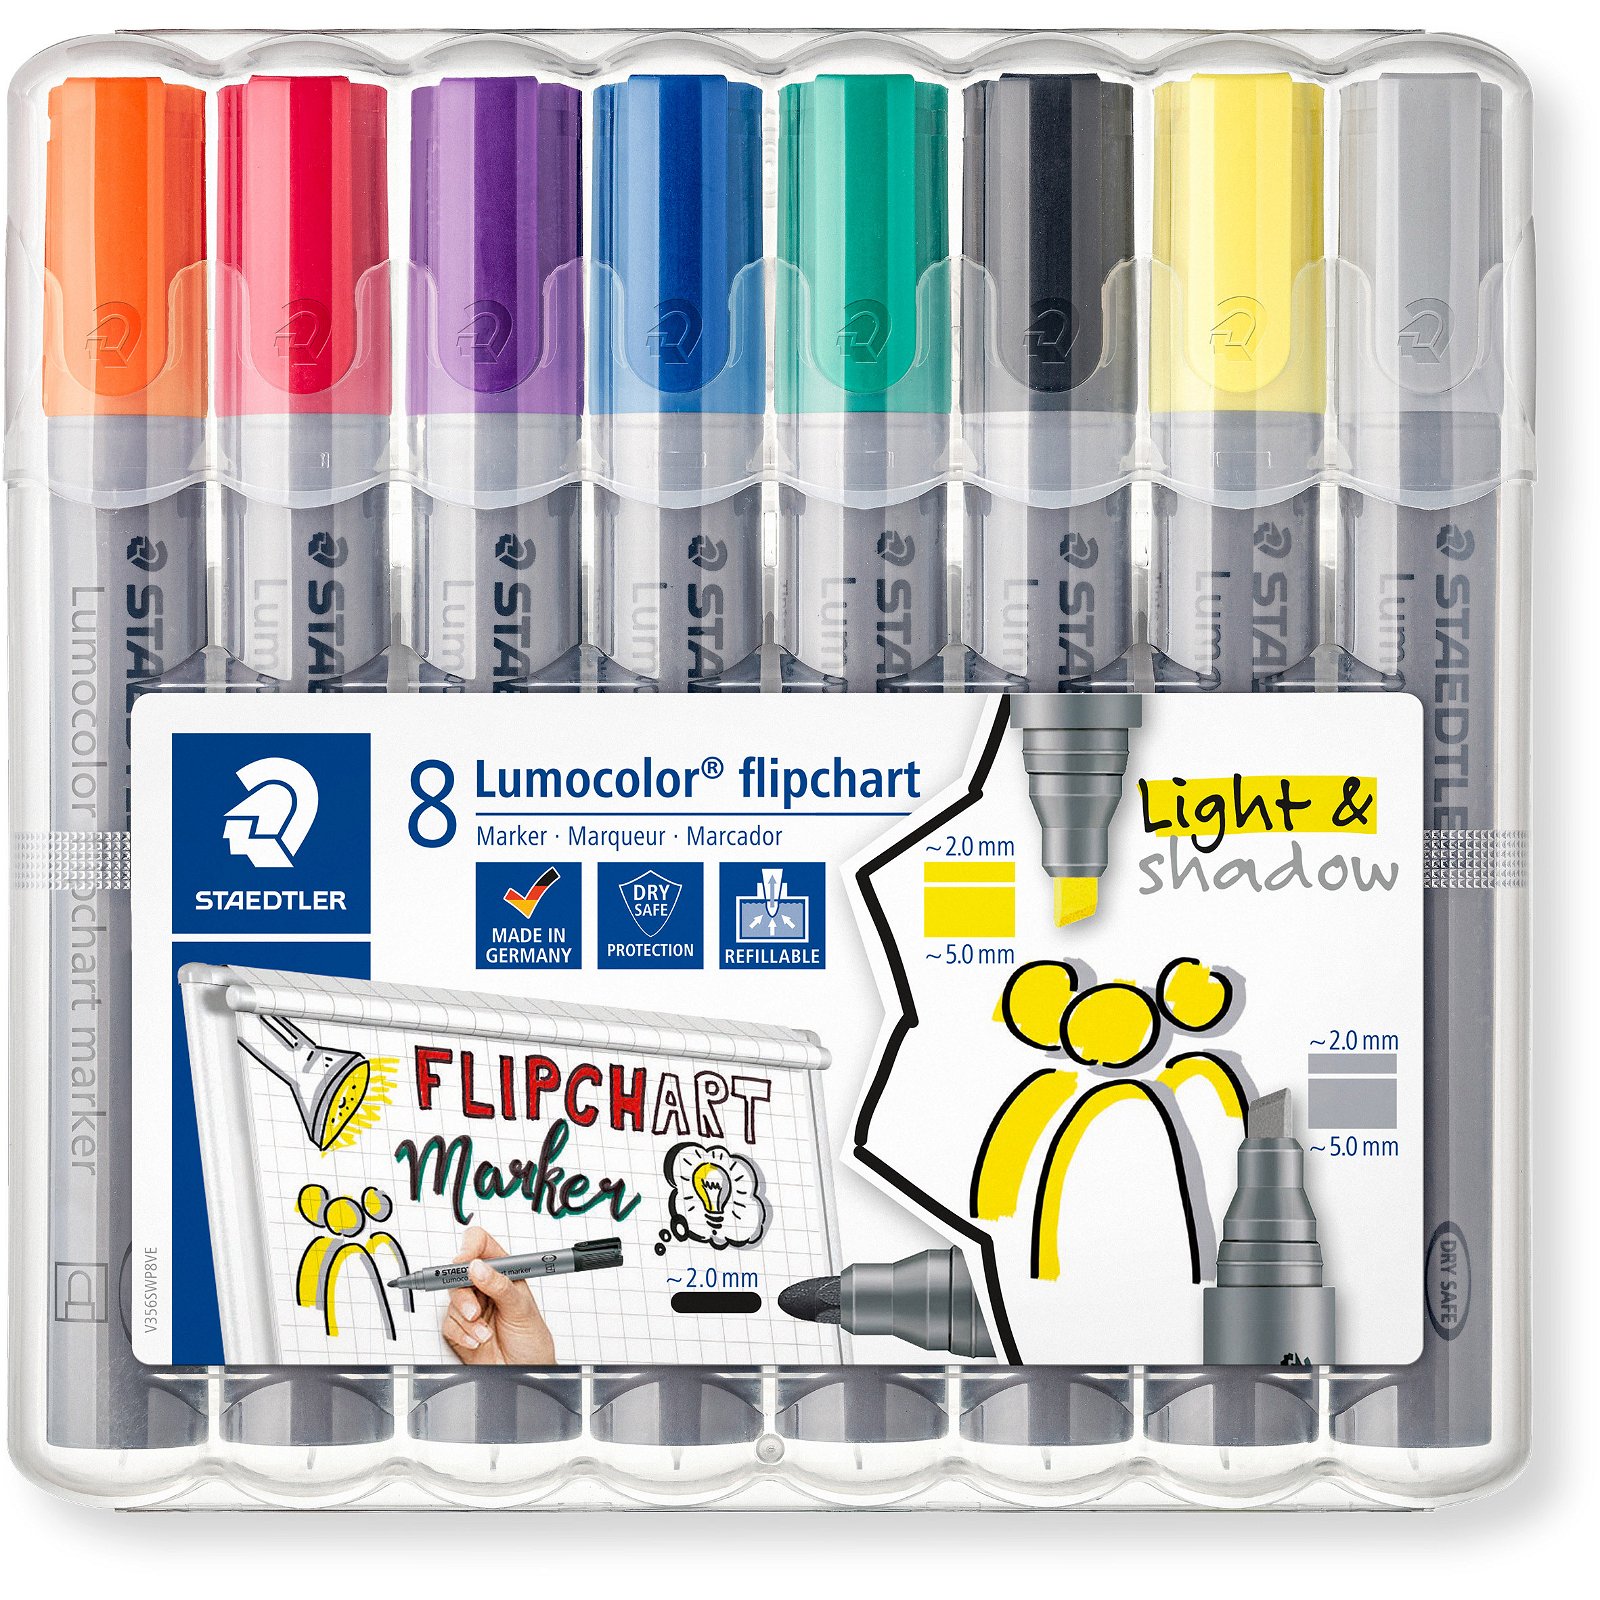 STAEDTLER Lumorcolor flipchart marker